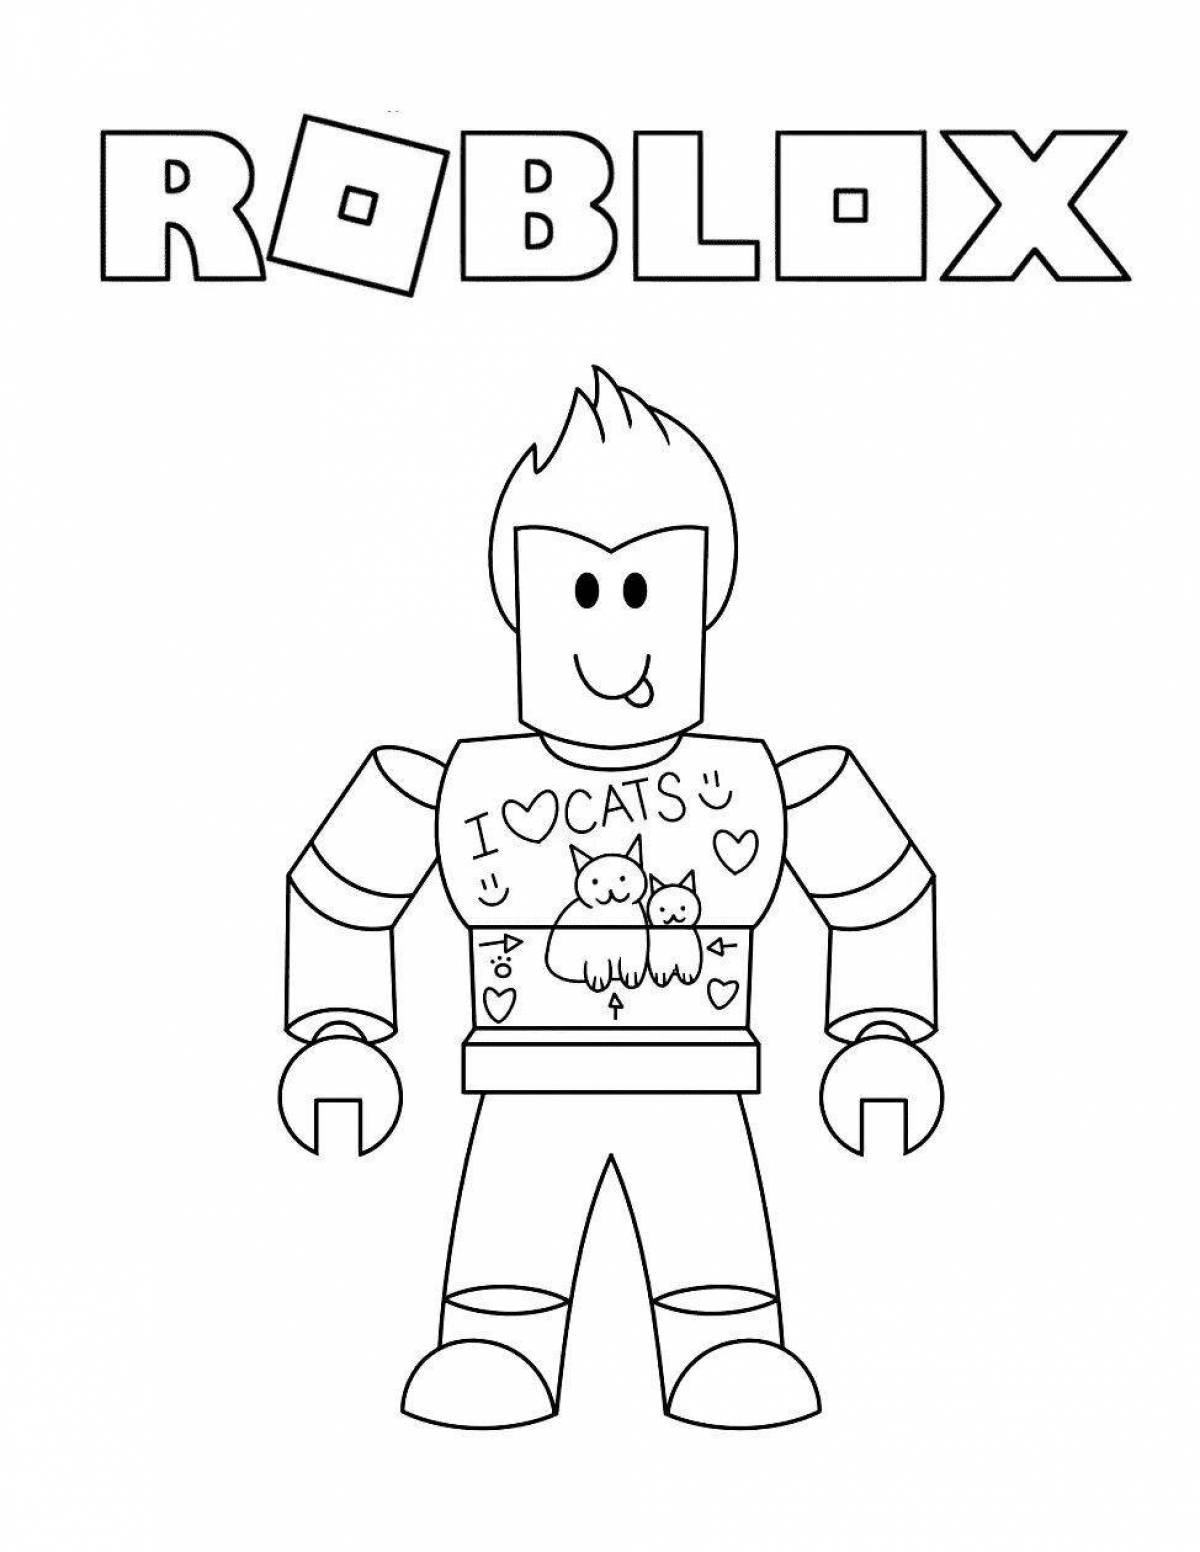 Roblox 3008 bright coloring